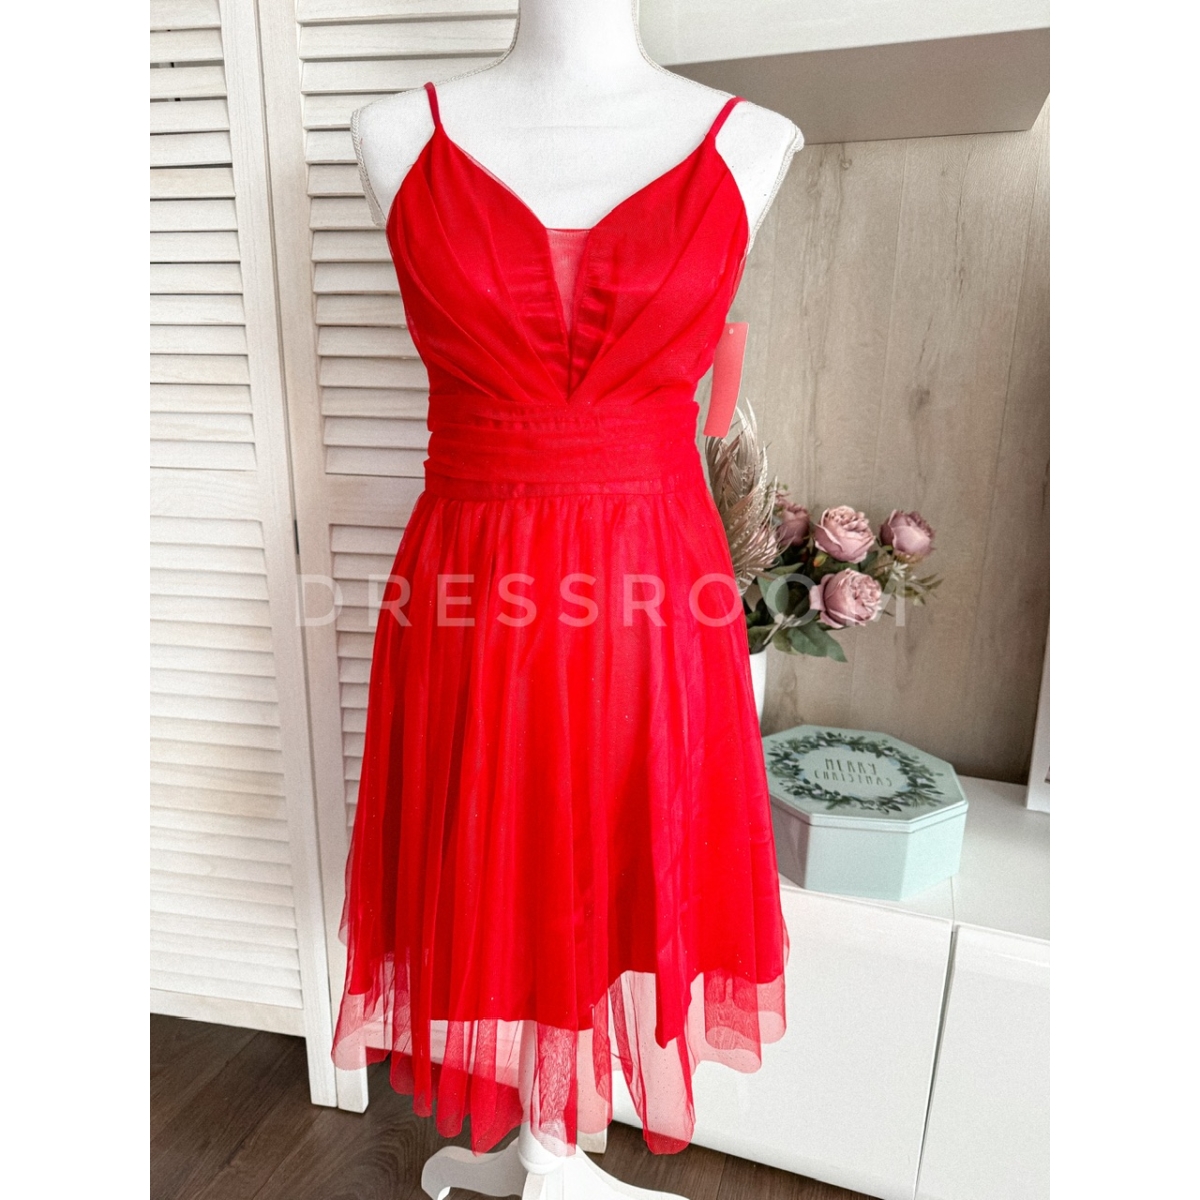 LUXORY csillámos ruha - Piros - Menyecske ruha